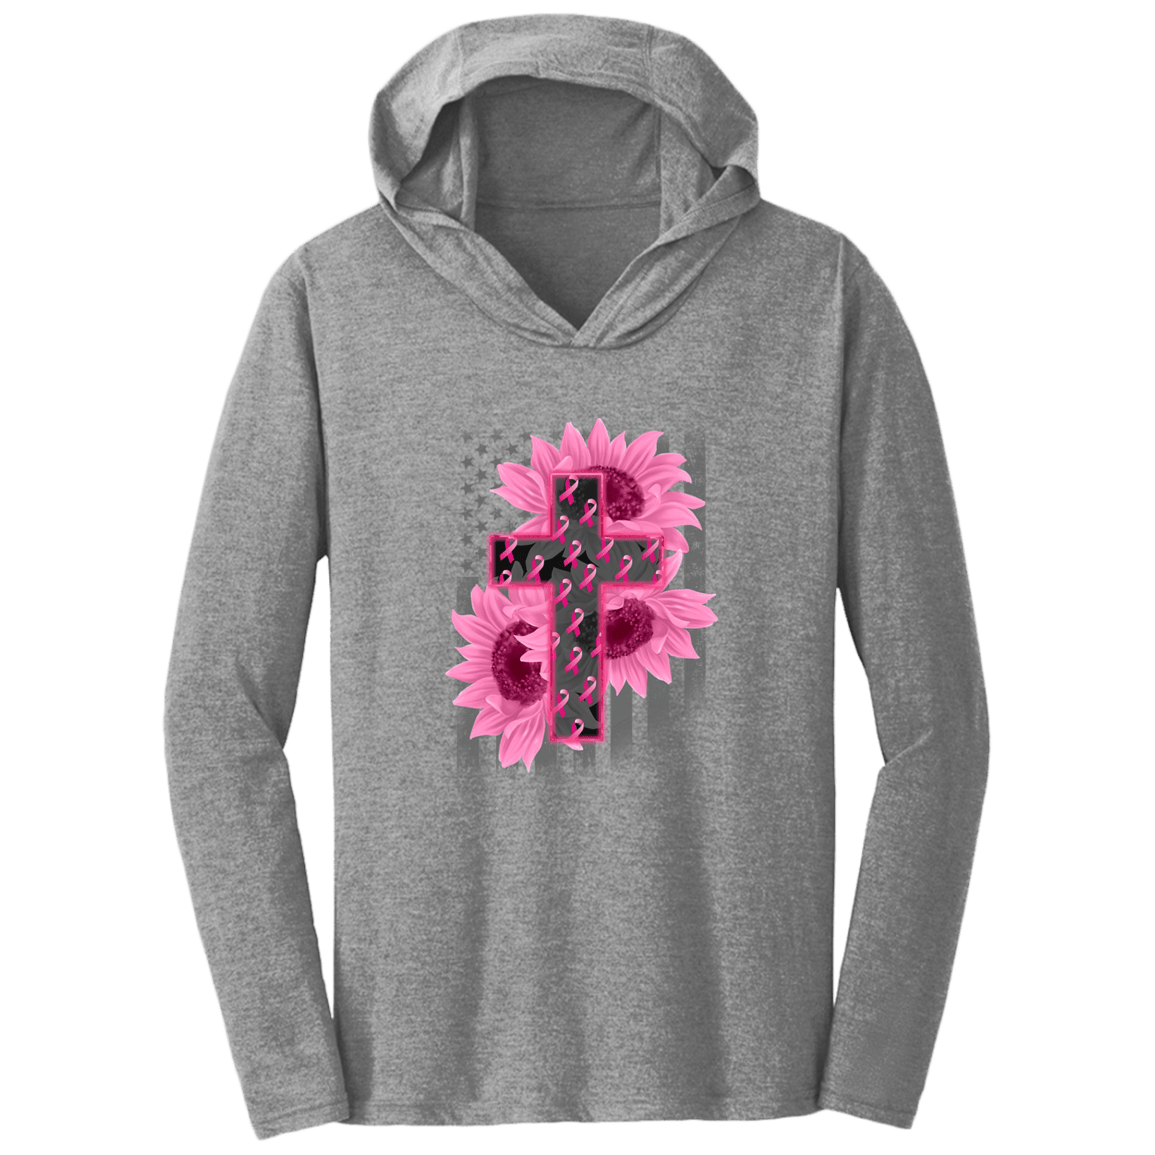 Breast Cancer Awareness Flower Cross Soft Hoodie